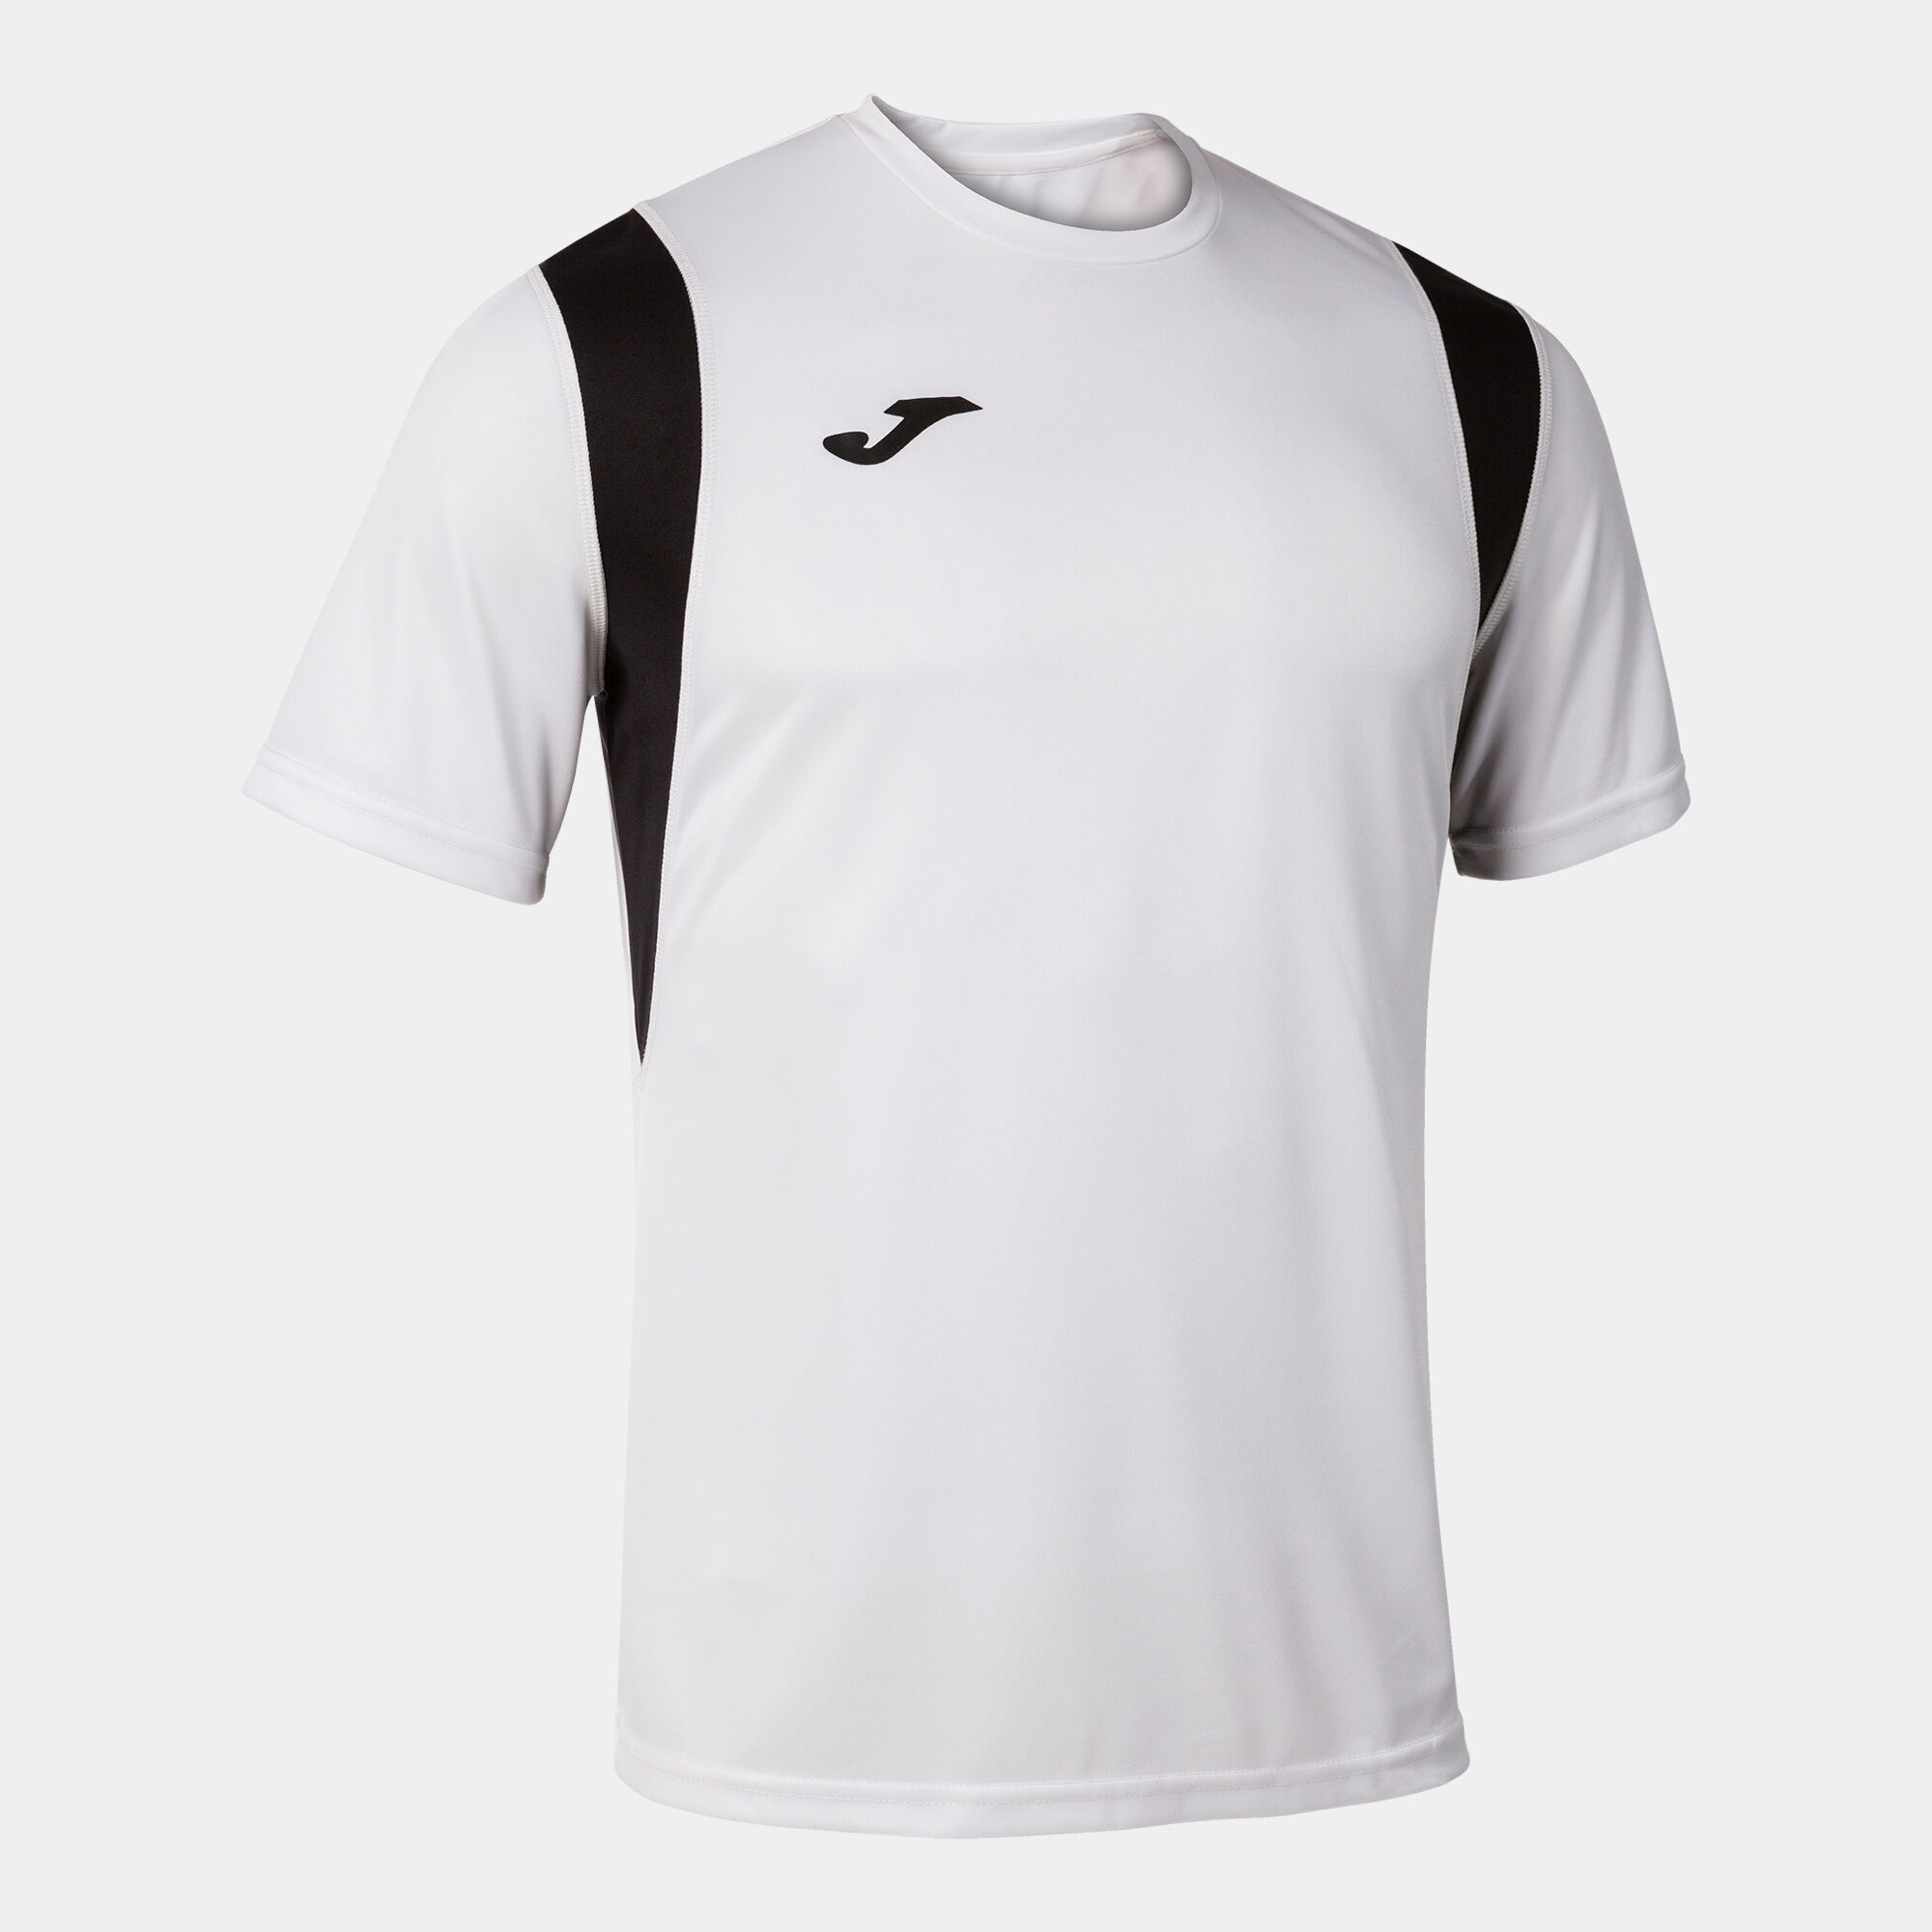 Camiseta manga corta hombre Dinamo blanco